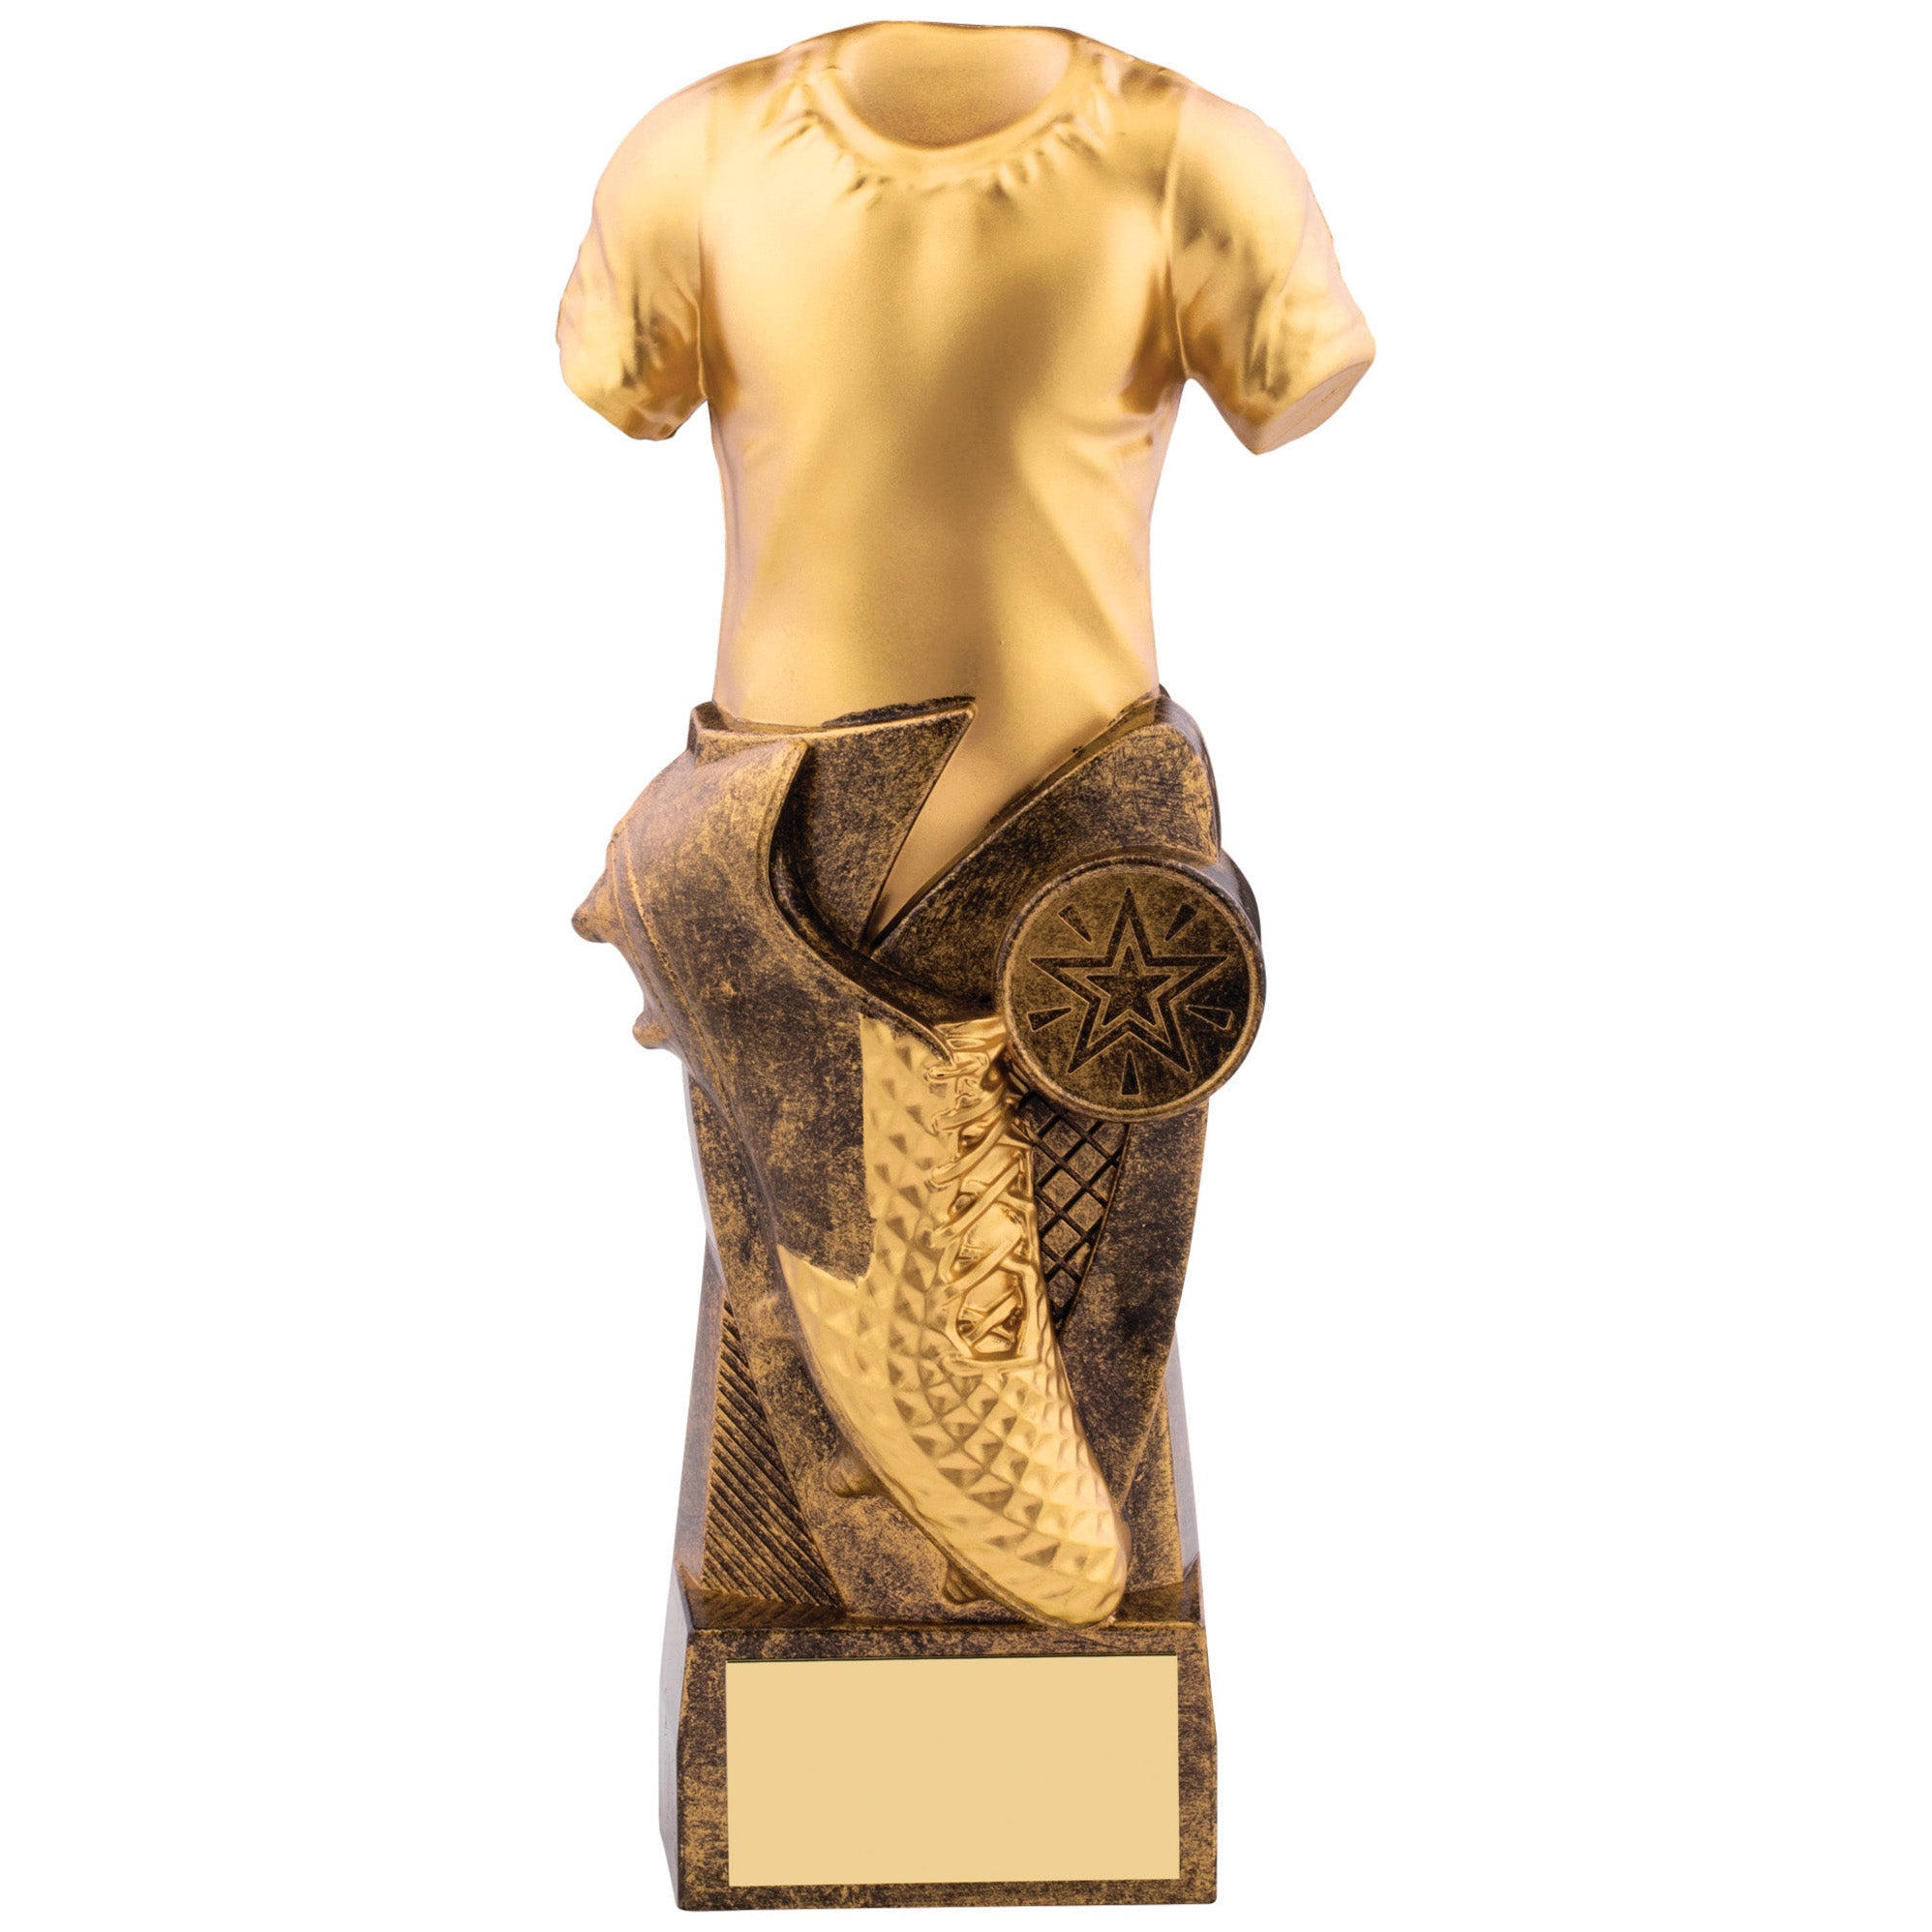 Tempo Gold Football Shirt Award